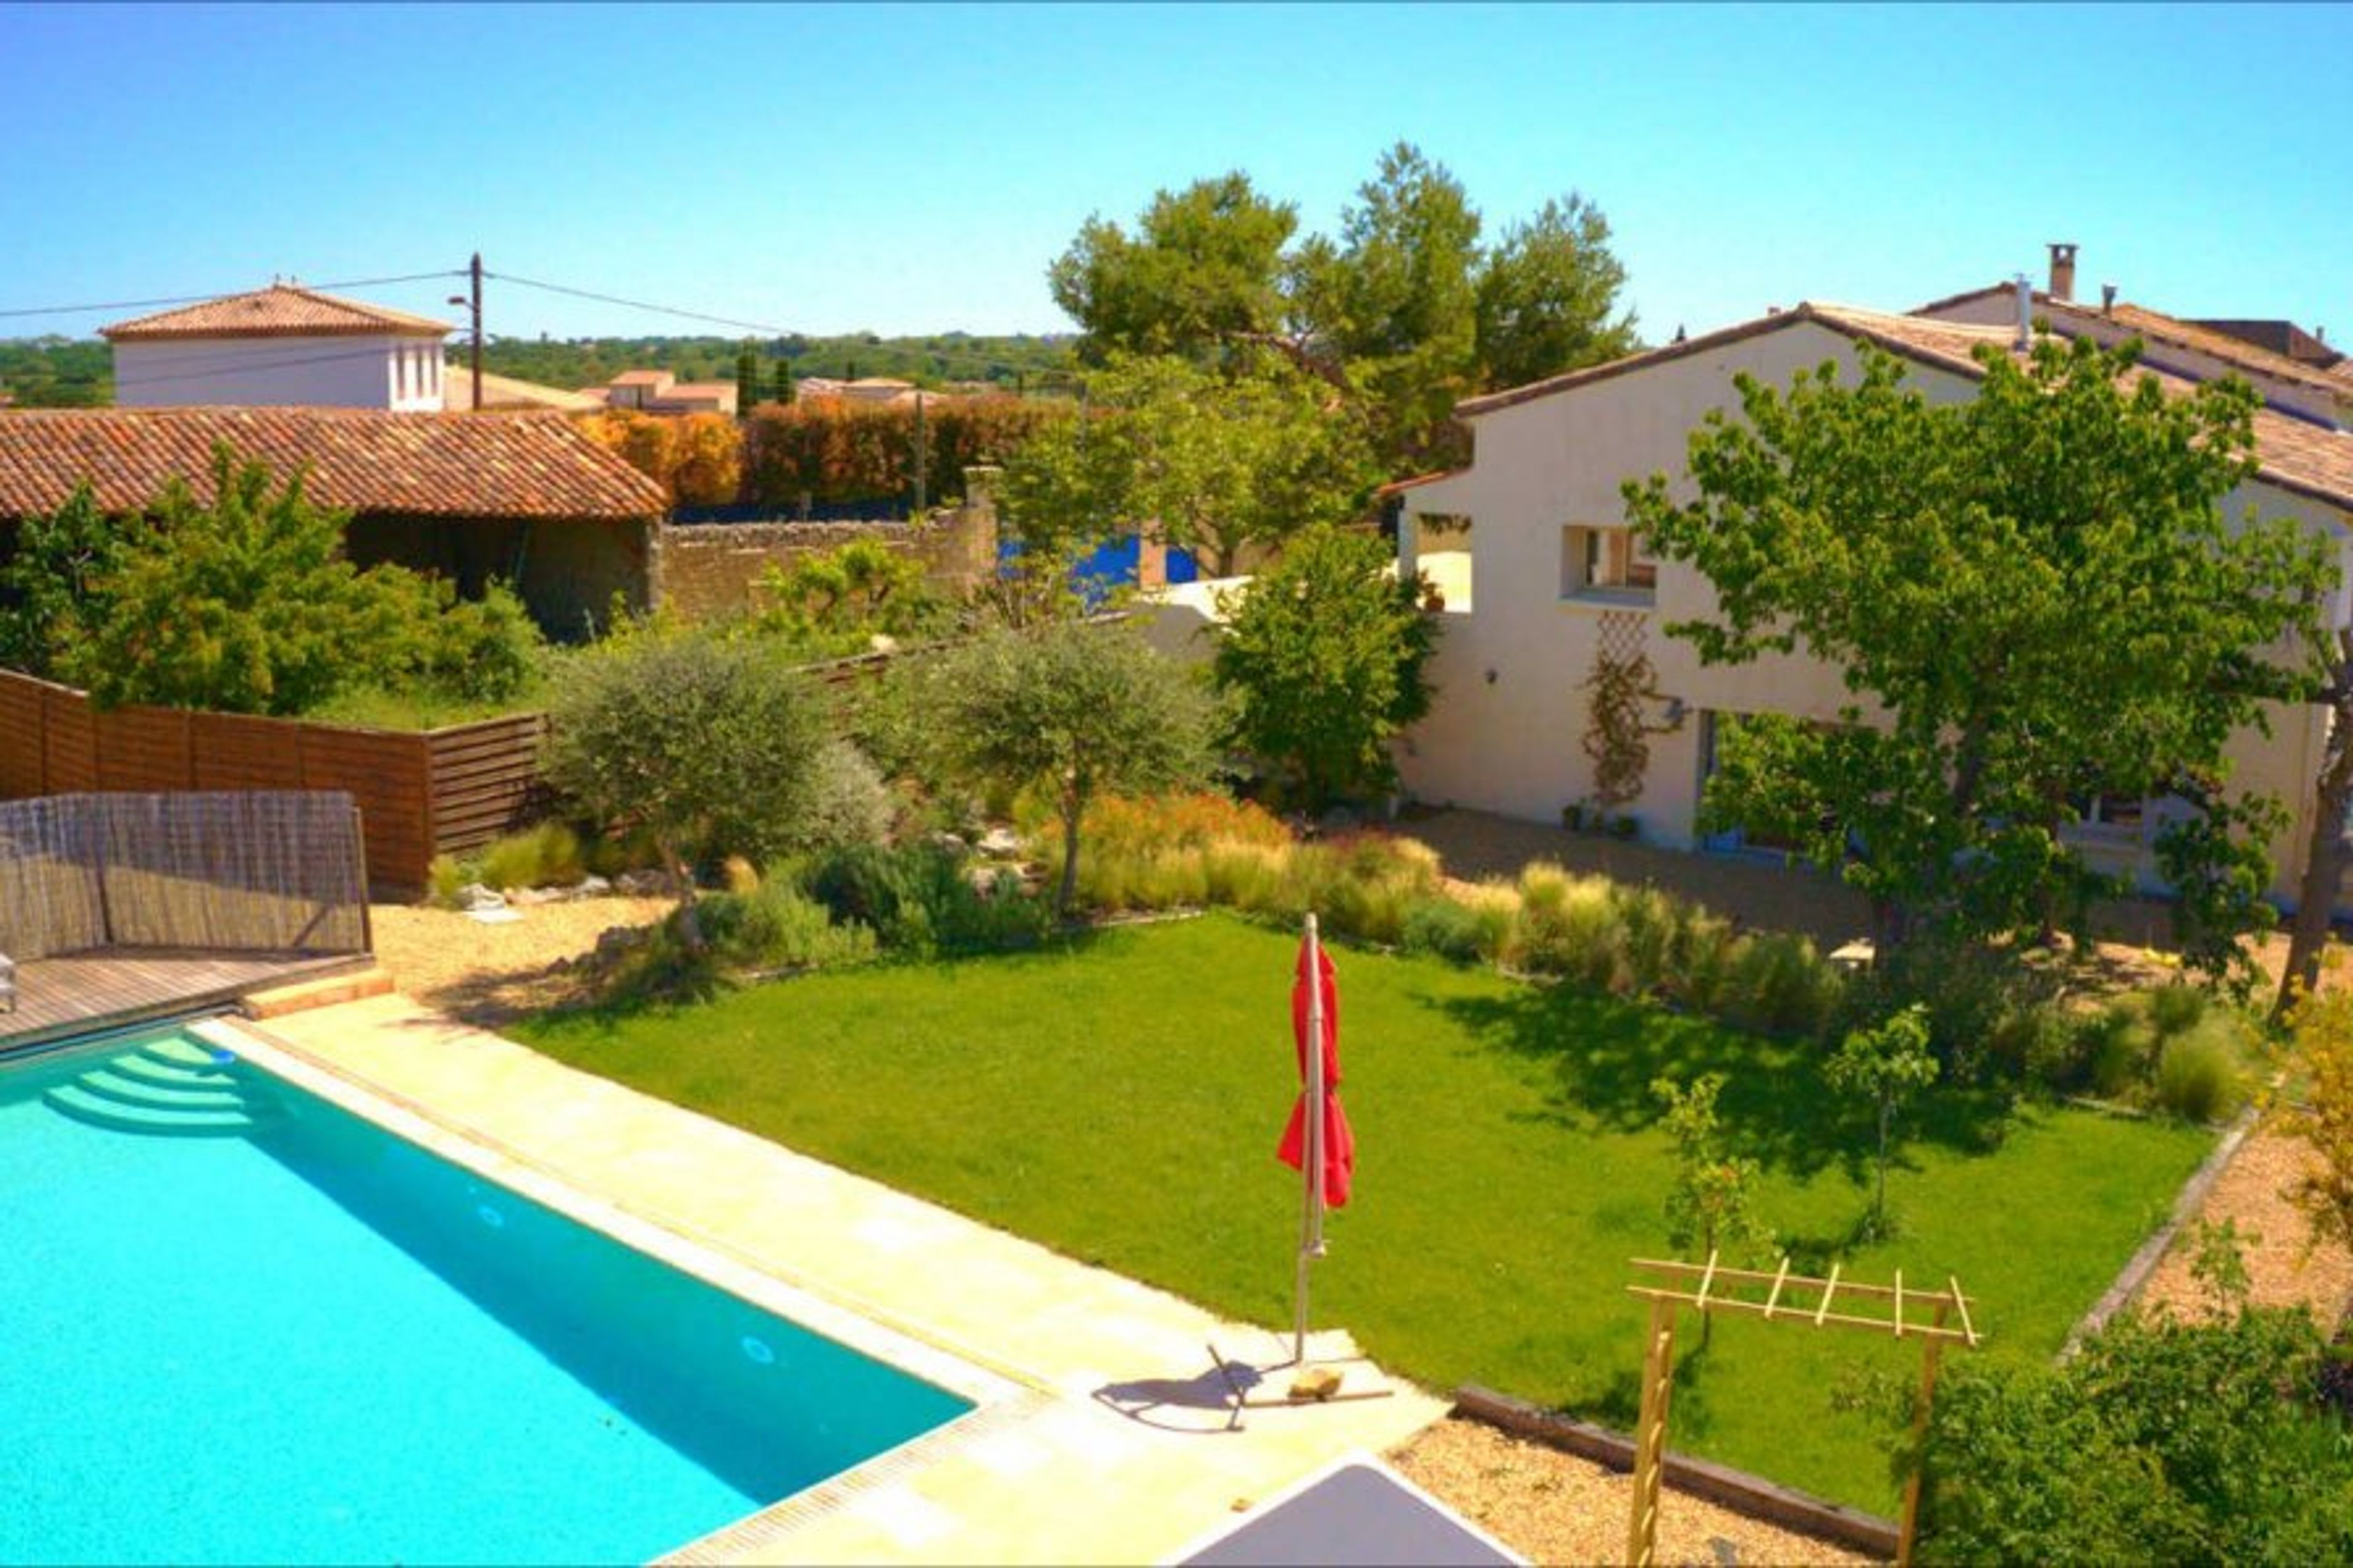 Maison Lavande- 4 bedroom villa with private pool